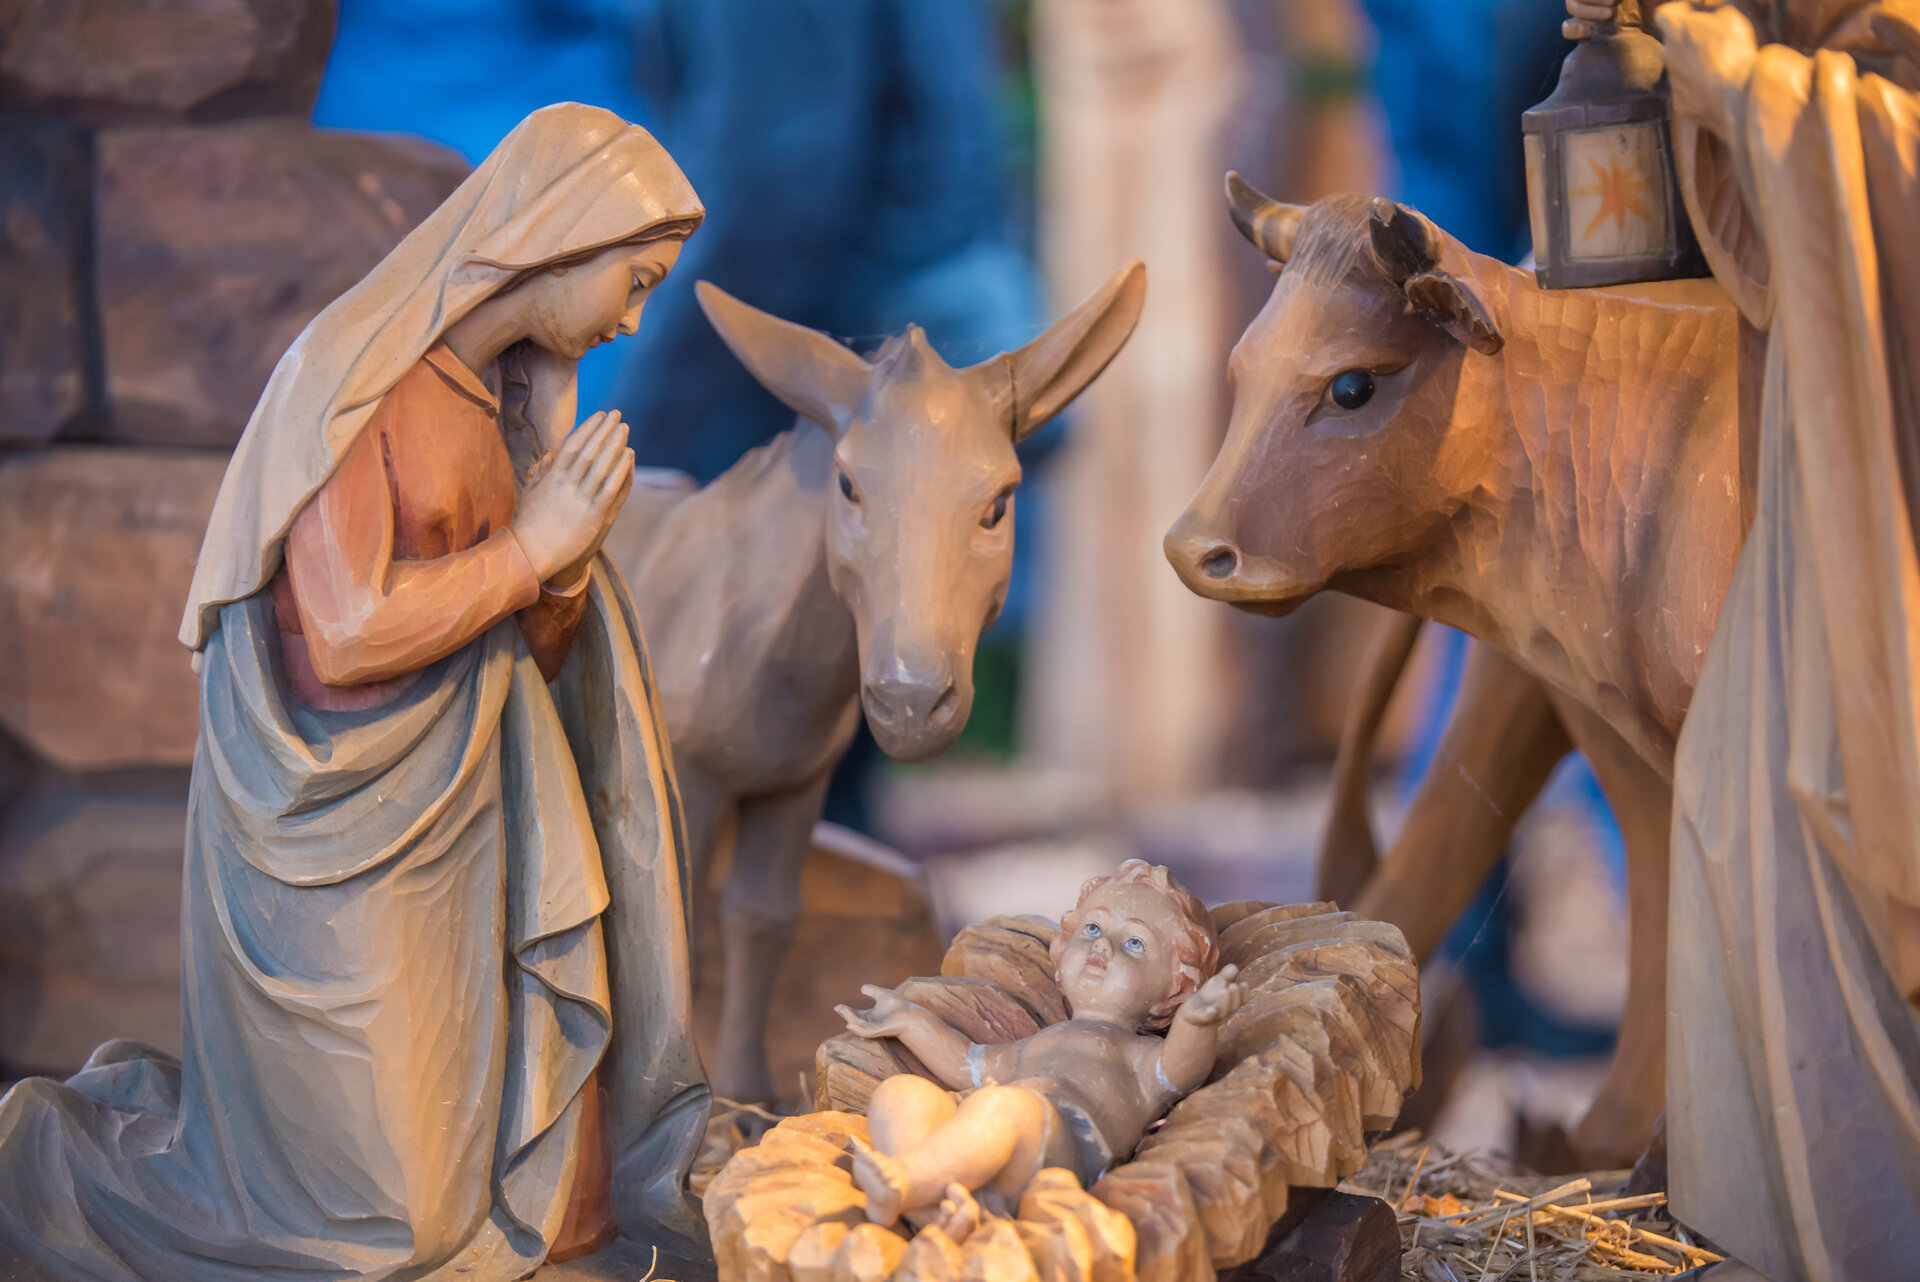 Krippenfiguren aus Holz, Weihnachtsgeschichte